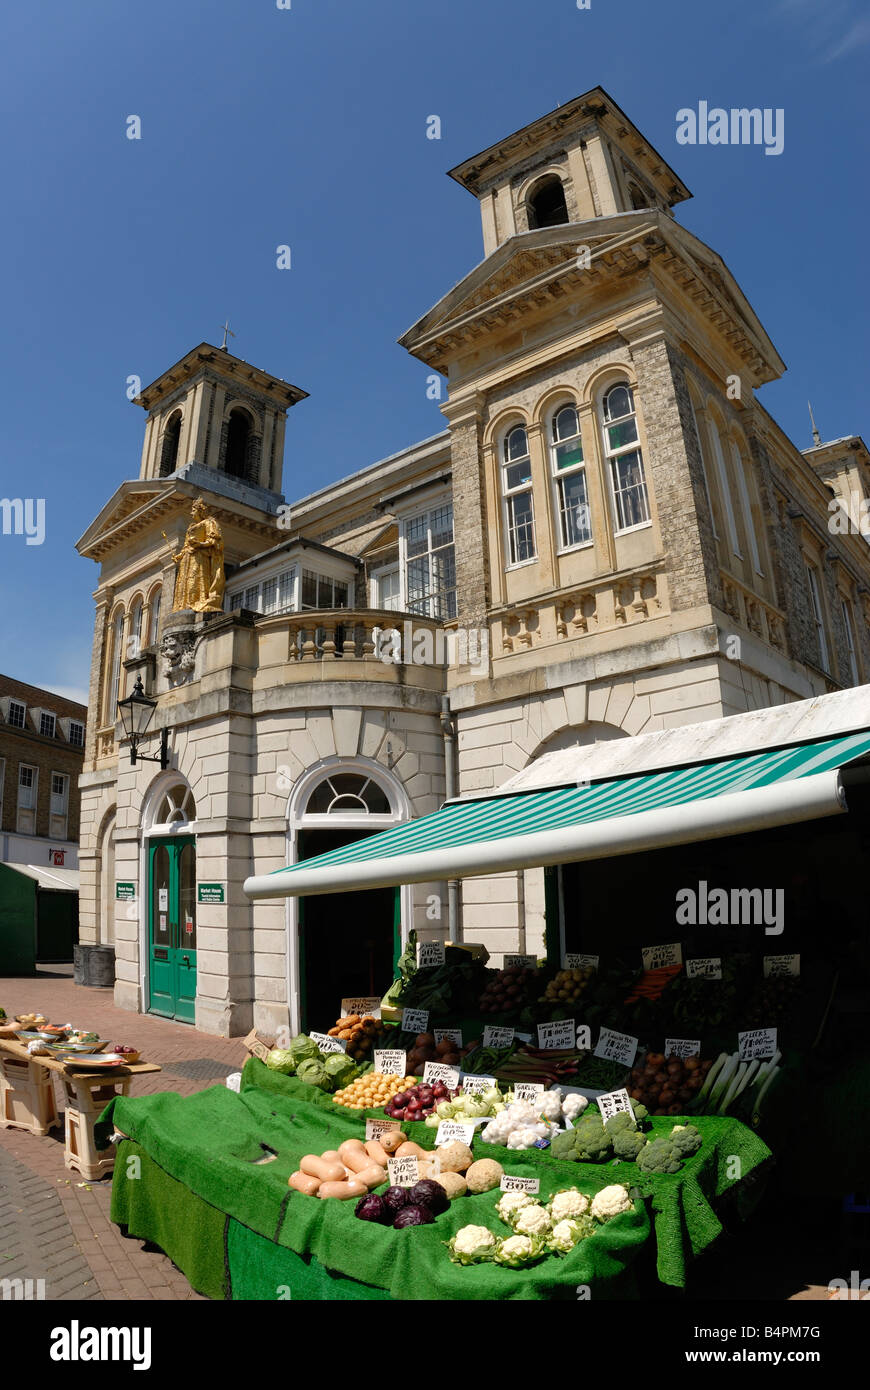 Casa mercato e bancarelle del mercato Kingston upon Thames Foto Stock